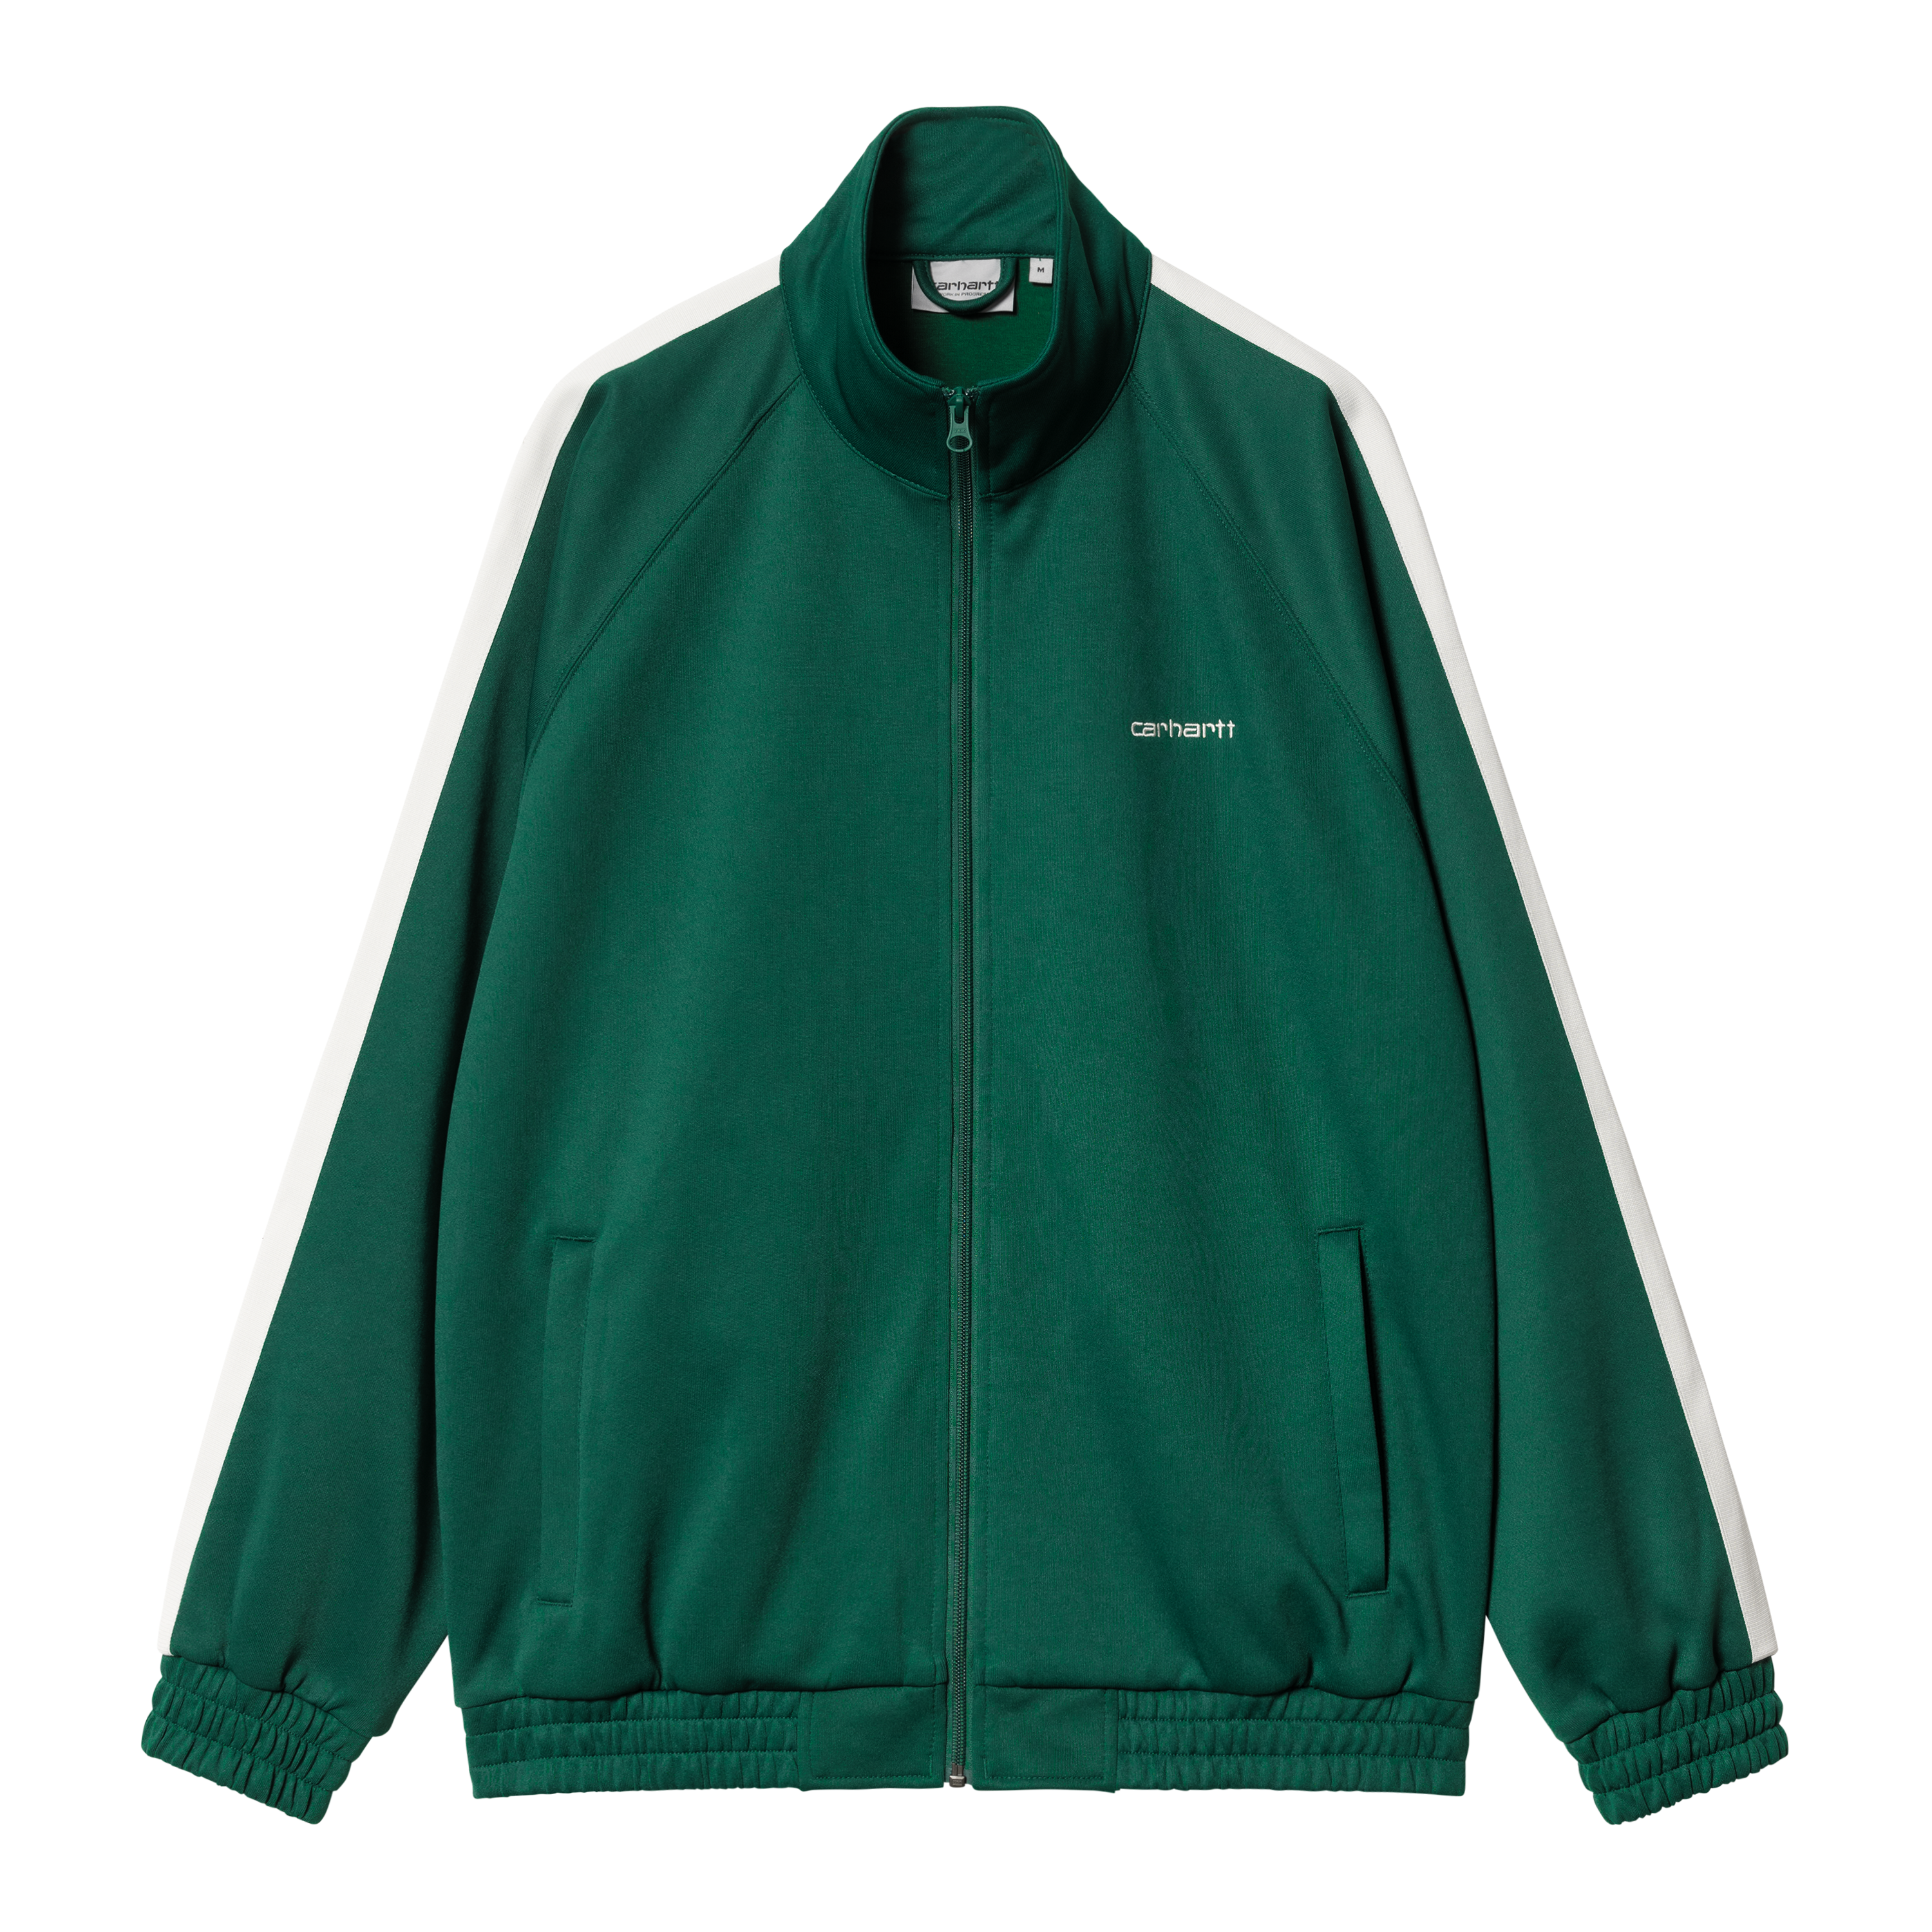 Carhartt WIP Benchill Jacket in Verde